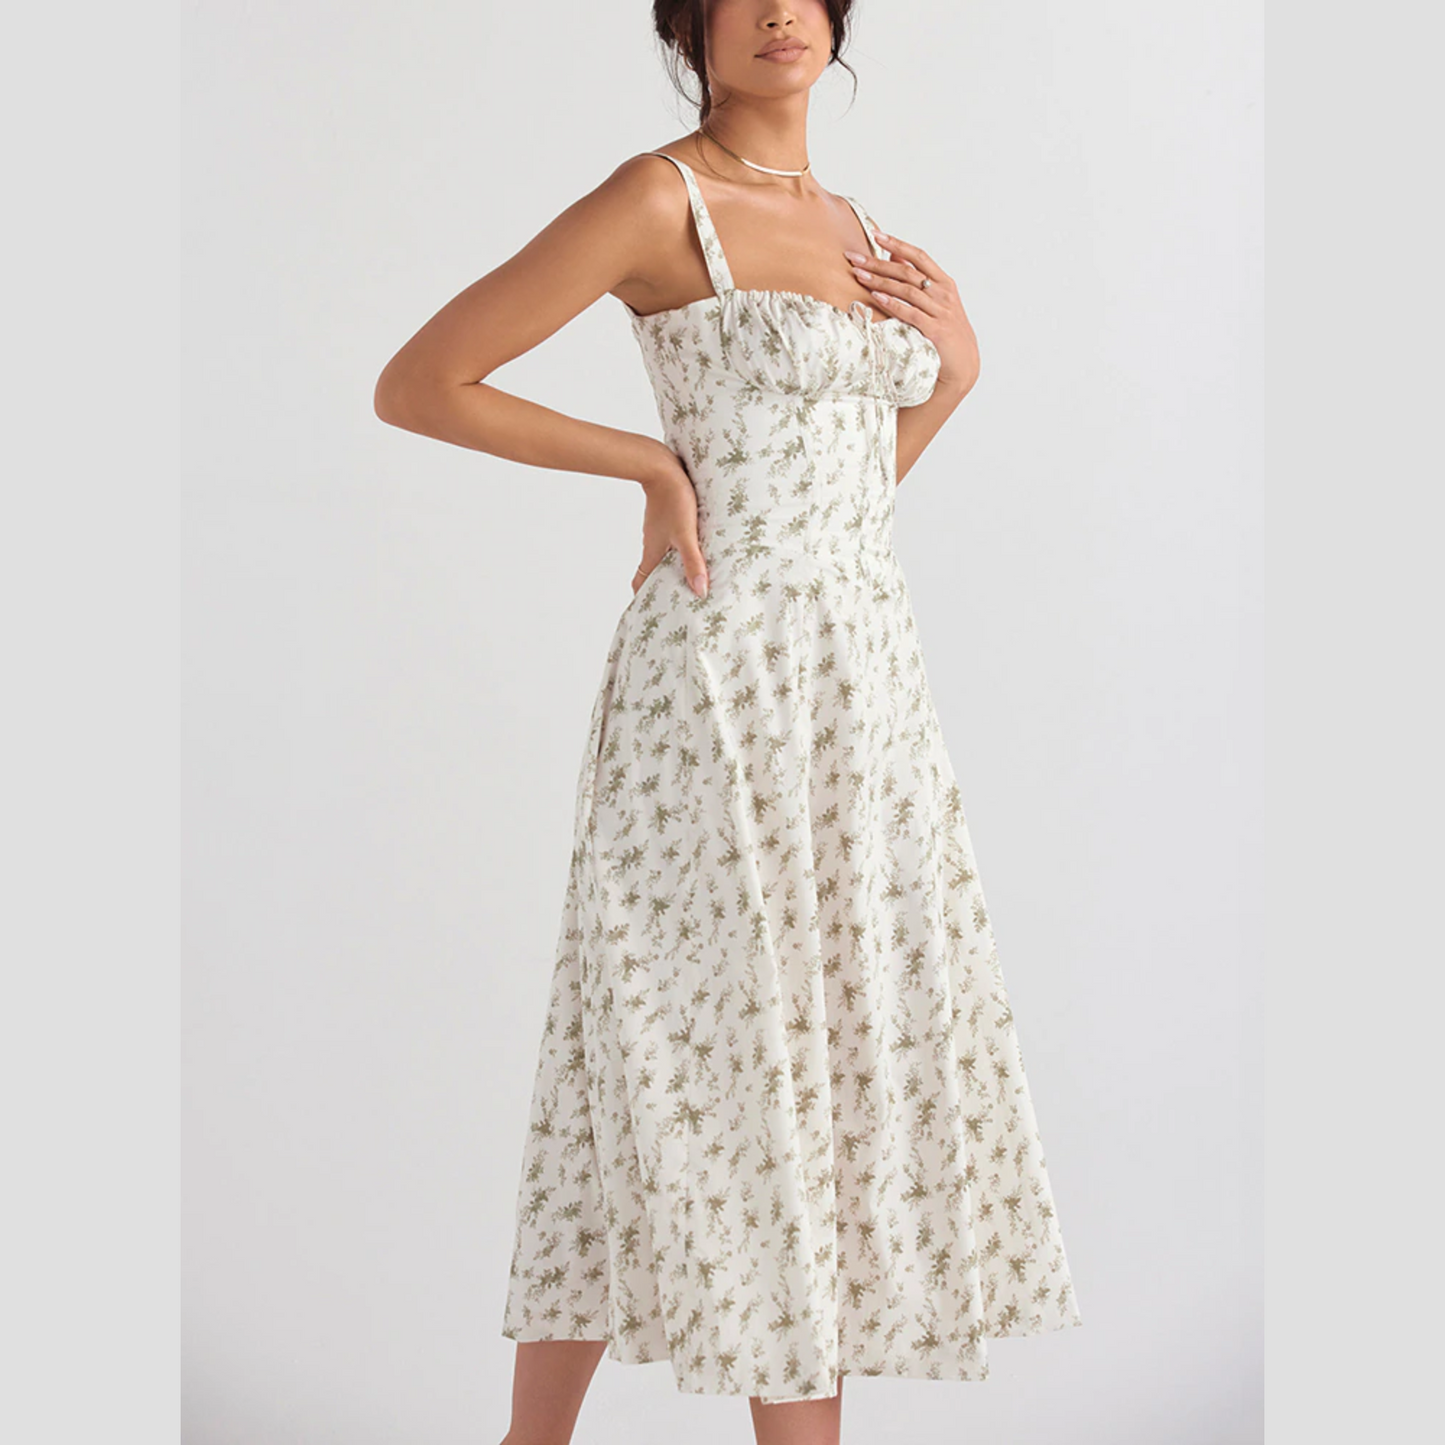 Ria - White Floral Print Summer Midi Dress